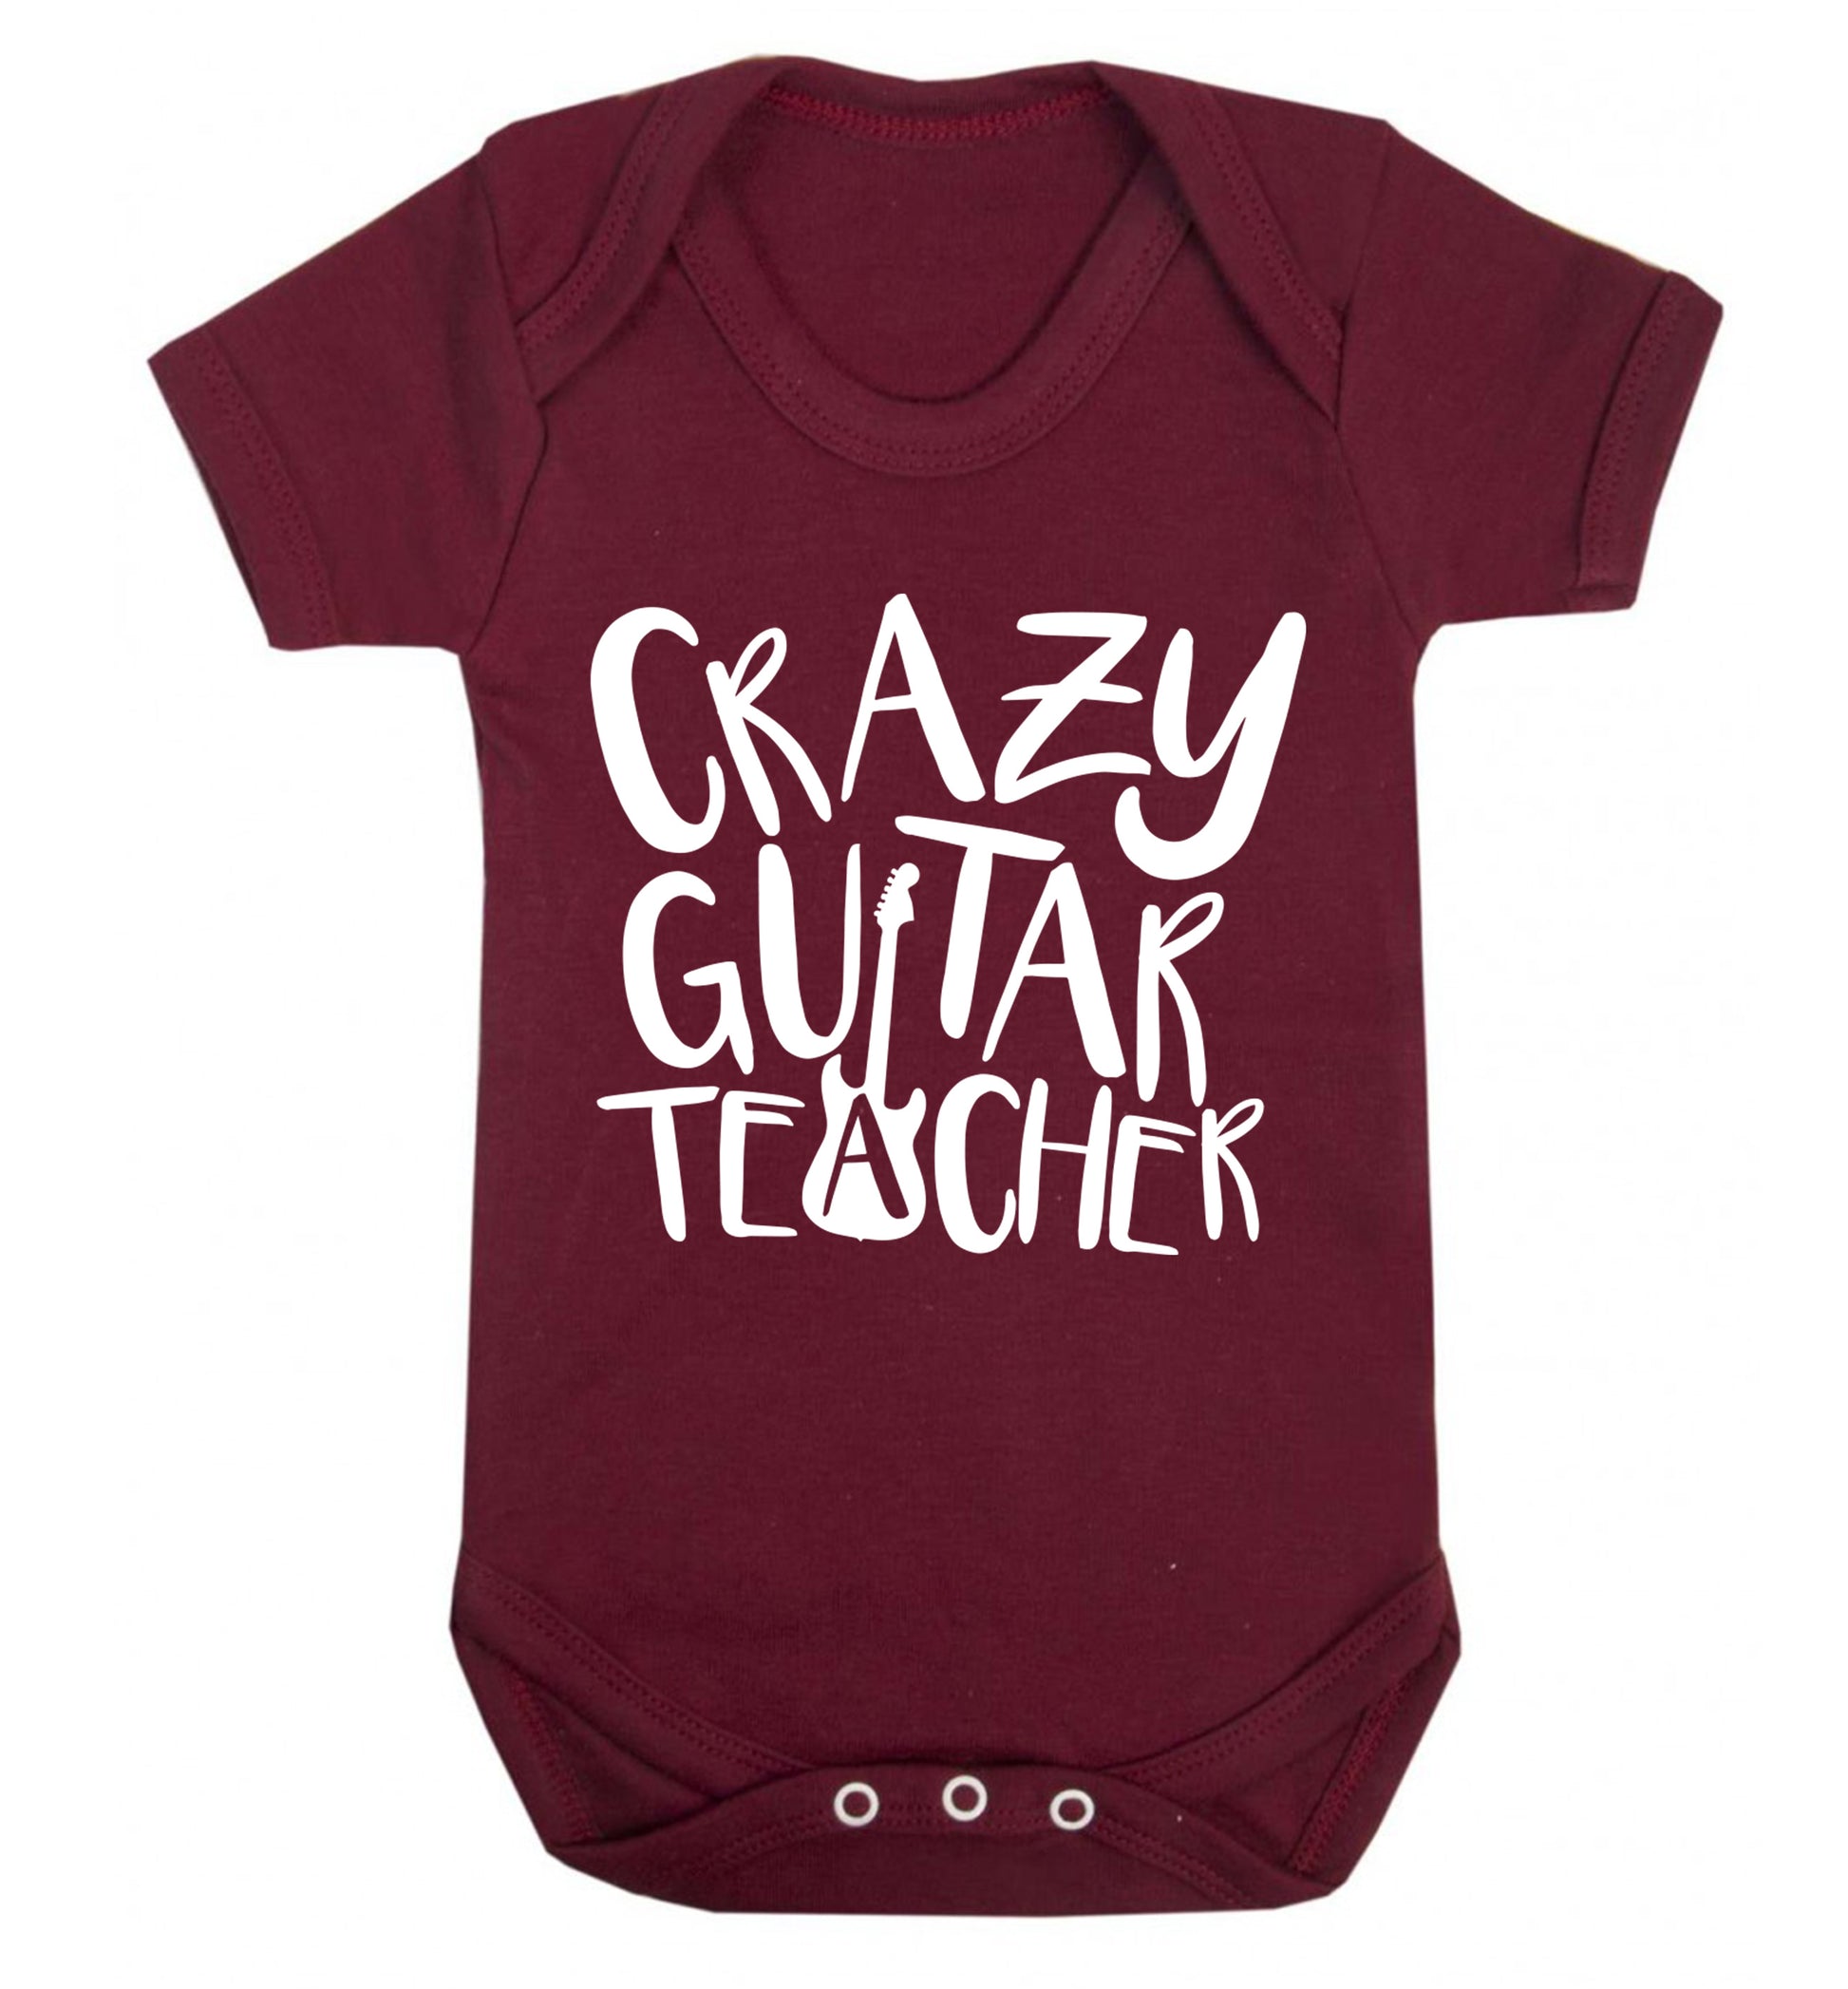 Crazy guitar teacher Baby Vest maroon 18-24 months